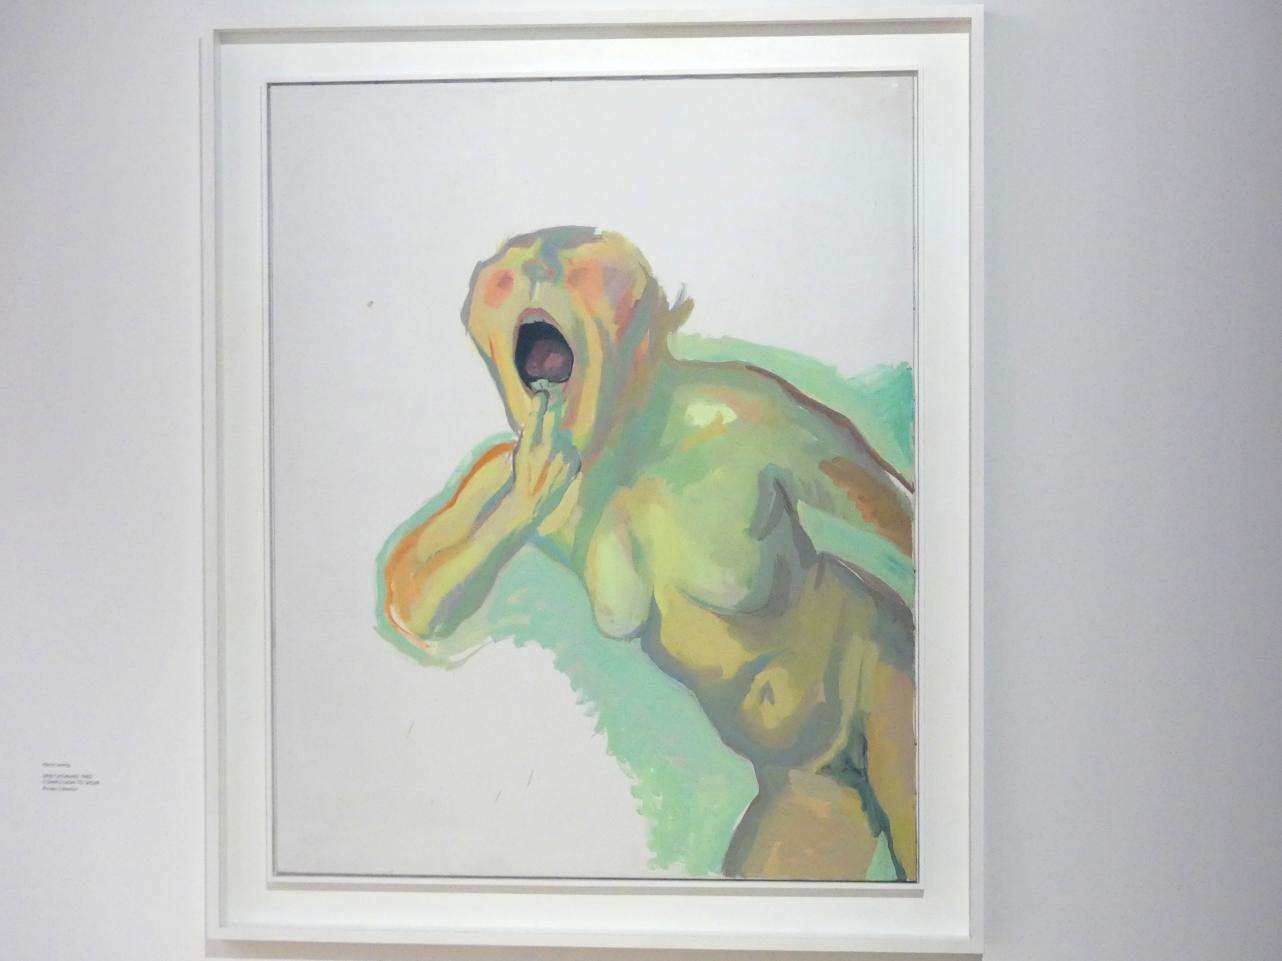 Maria Lassnig (1945–2011), Sprechzwang, München, Lenbachhaus, Kunstbau, Ausstellung "BODY CHECK" vom 21.05.-15.09.2019, 1980, Bild 1/2